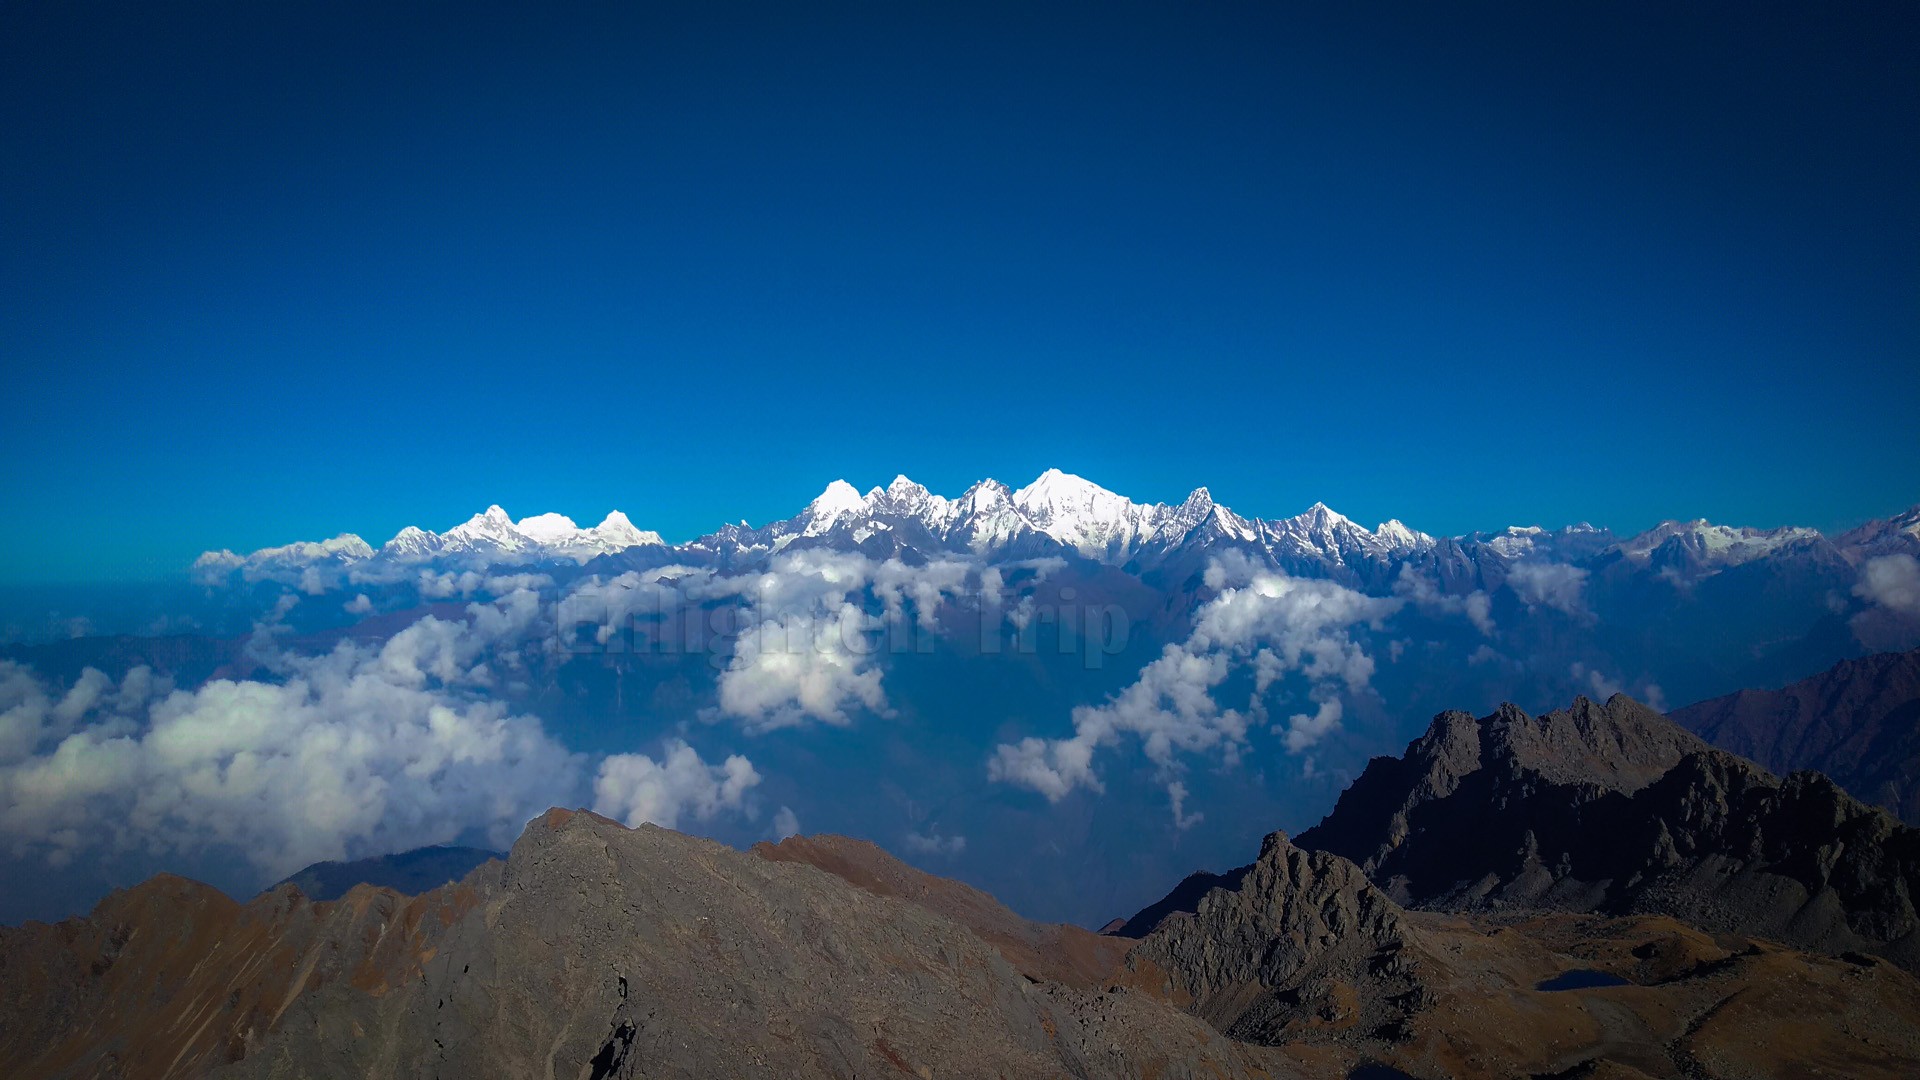 Langtang Himalayan range